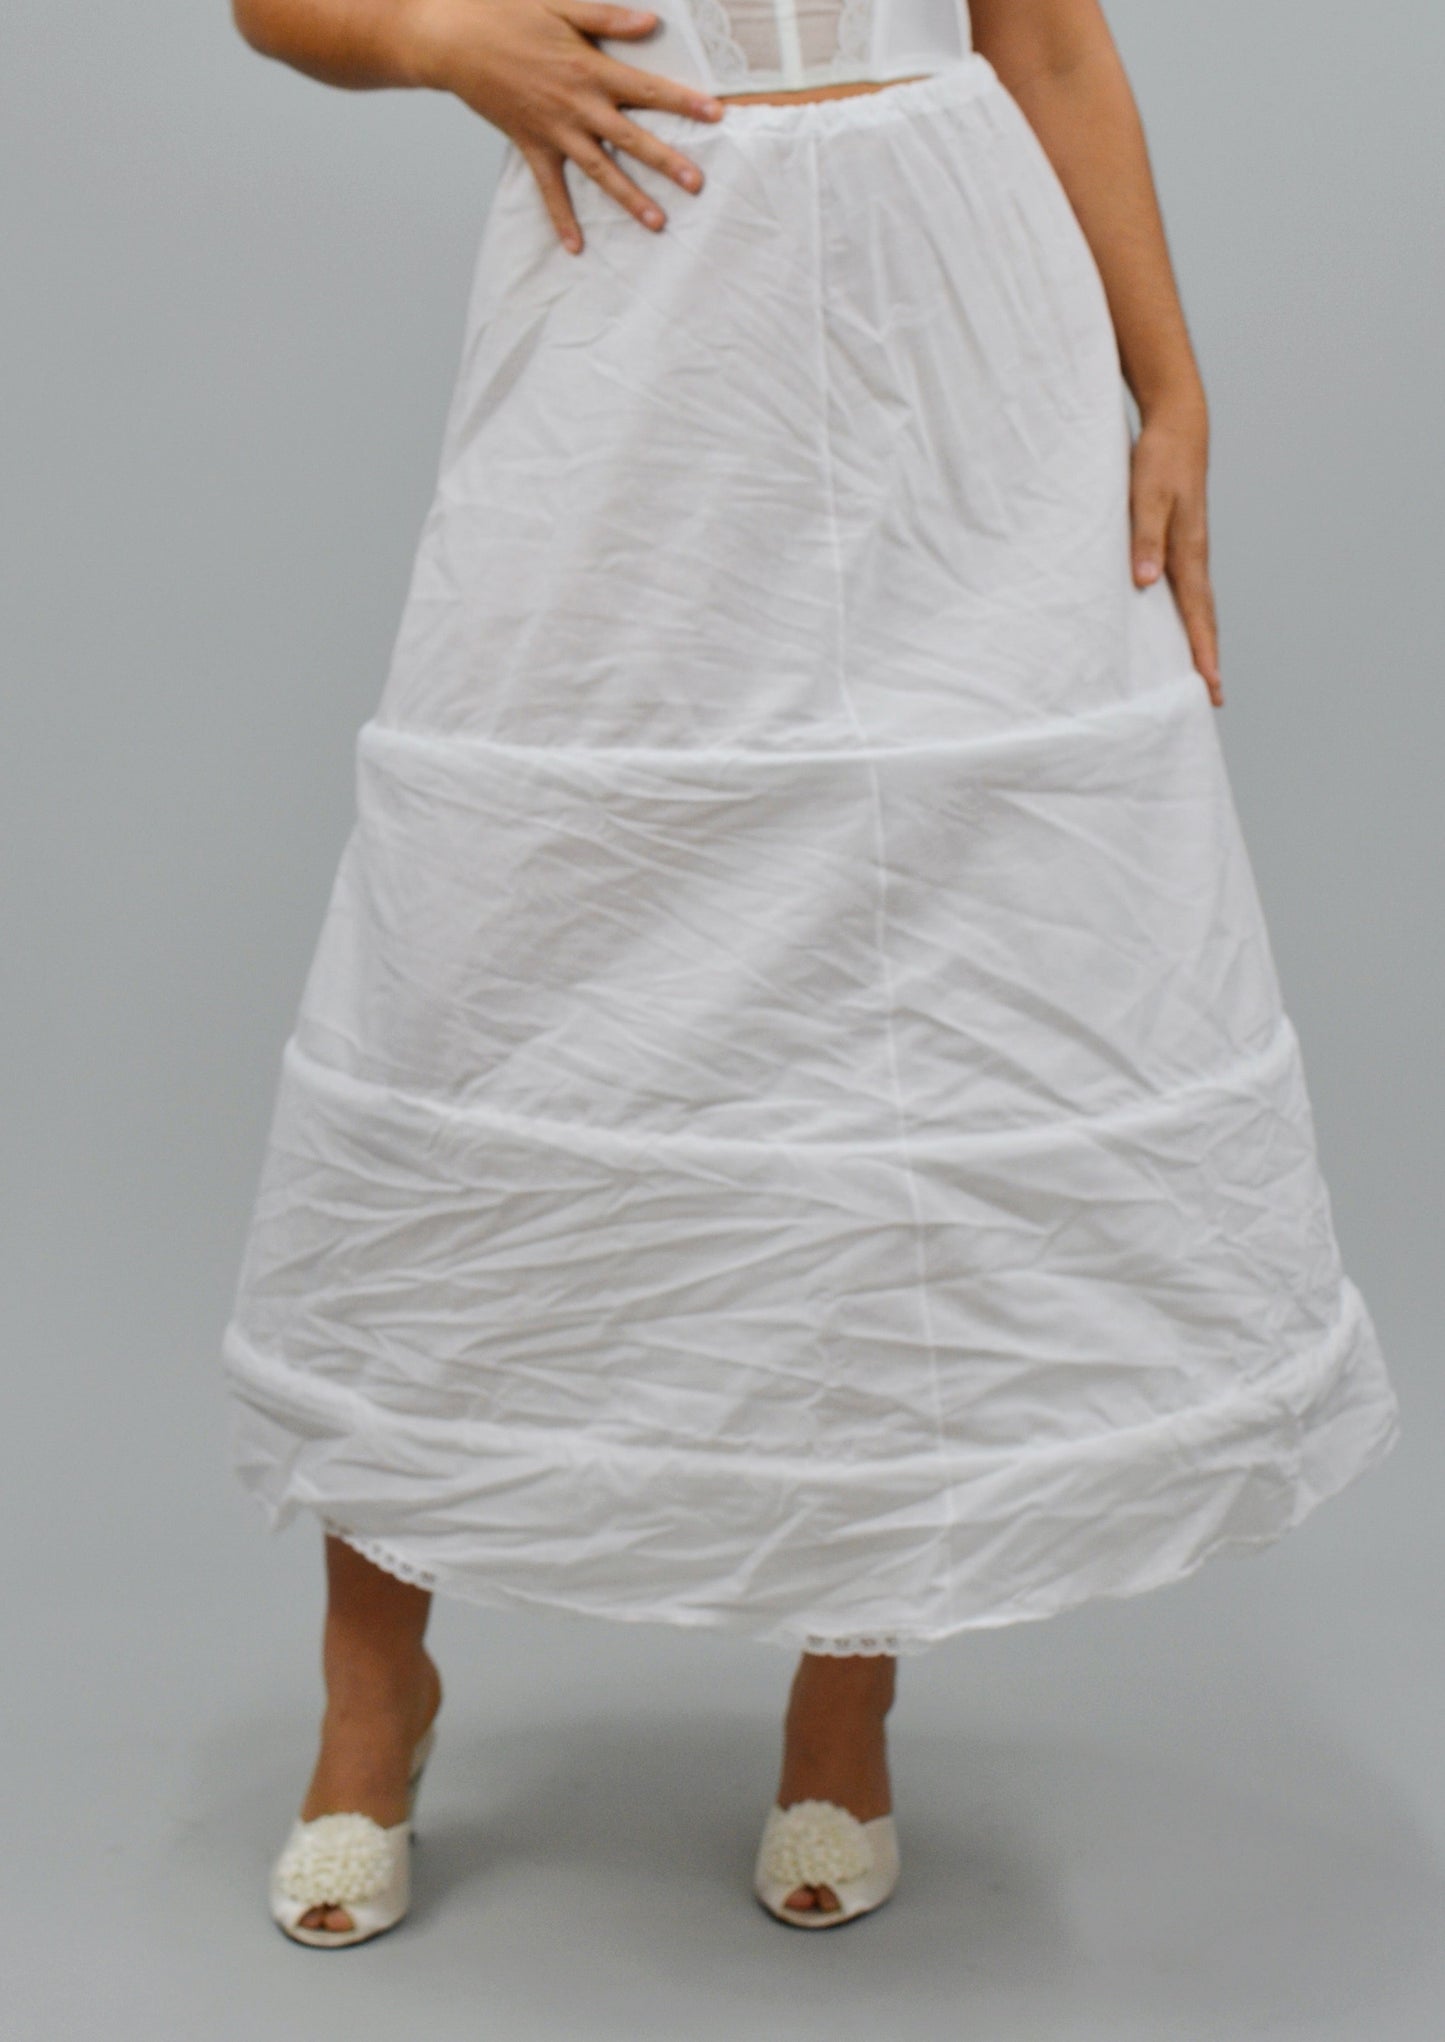 The Veran 3 Bone Cotton Hoop Skirt